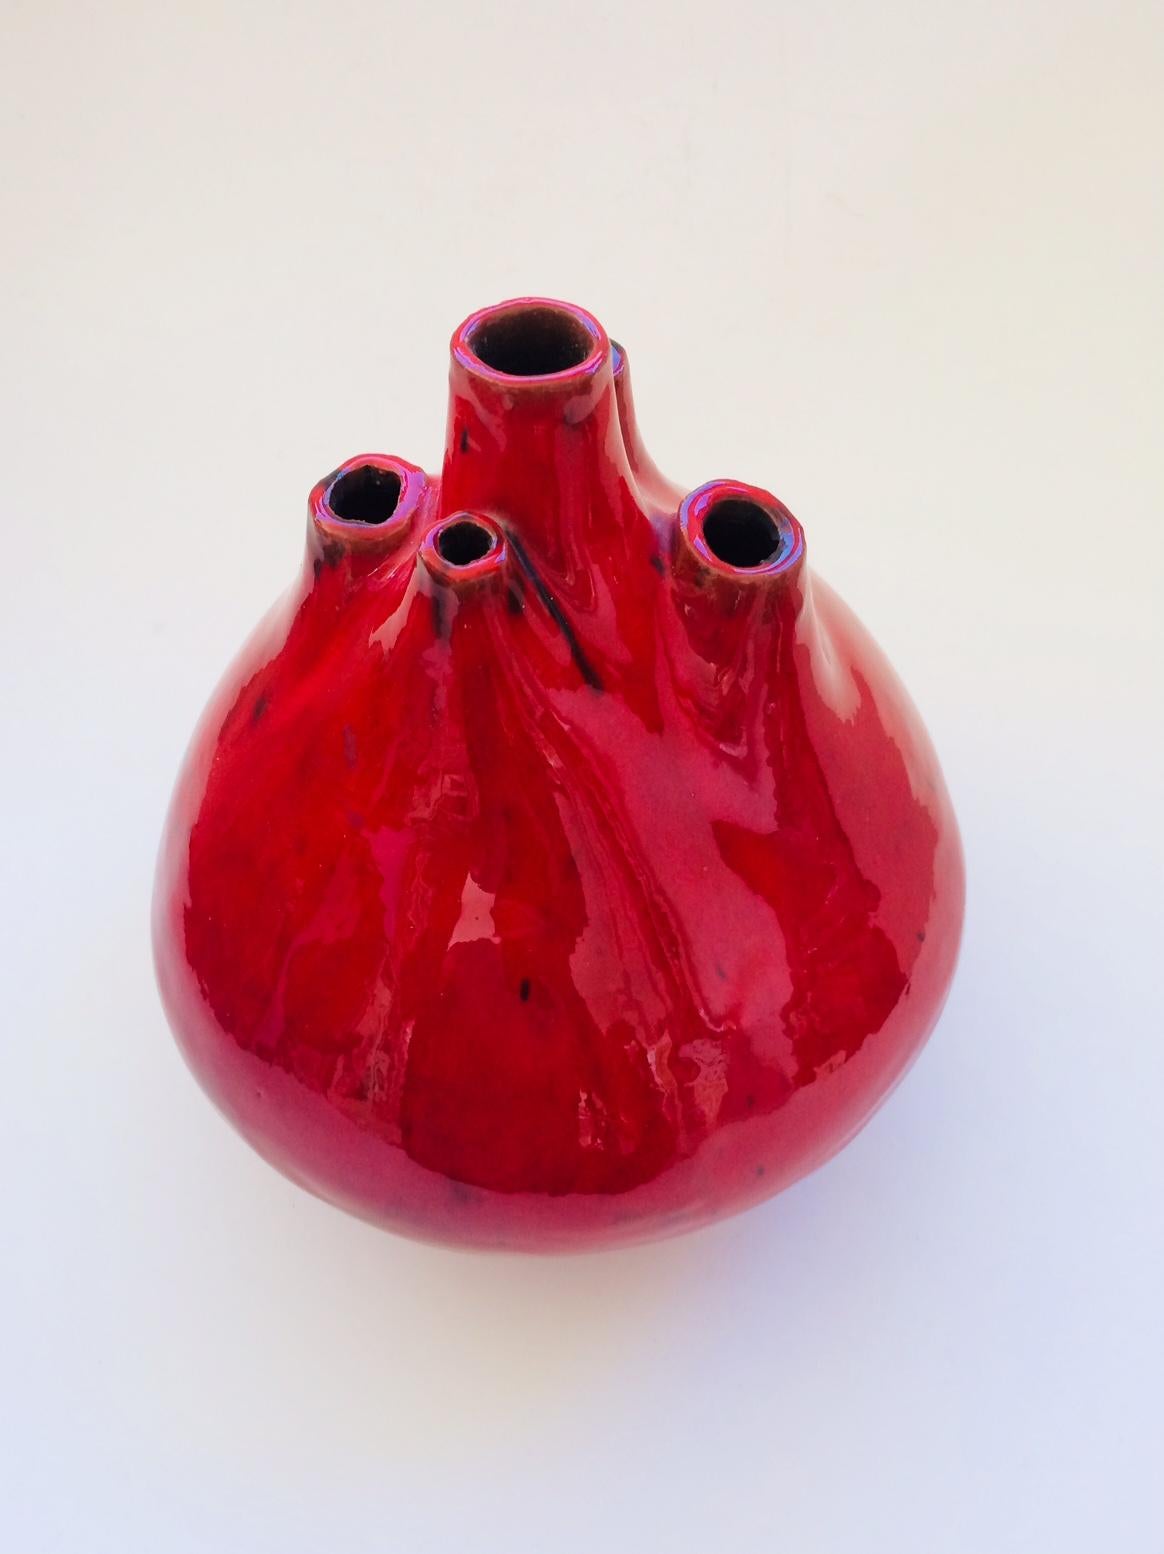 Mid-20th Century Belgian Art Pottery Studio Spout Vase by Hugria Ceramics Laarne 1960's For Sale